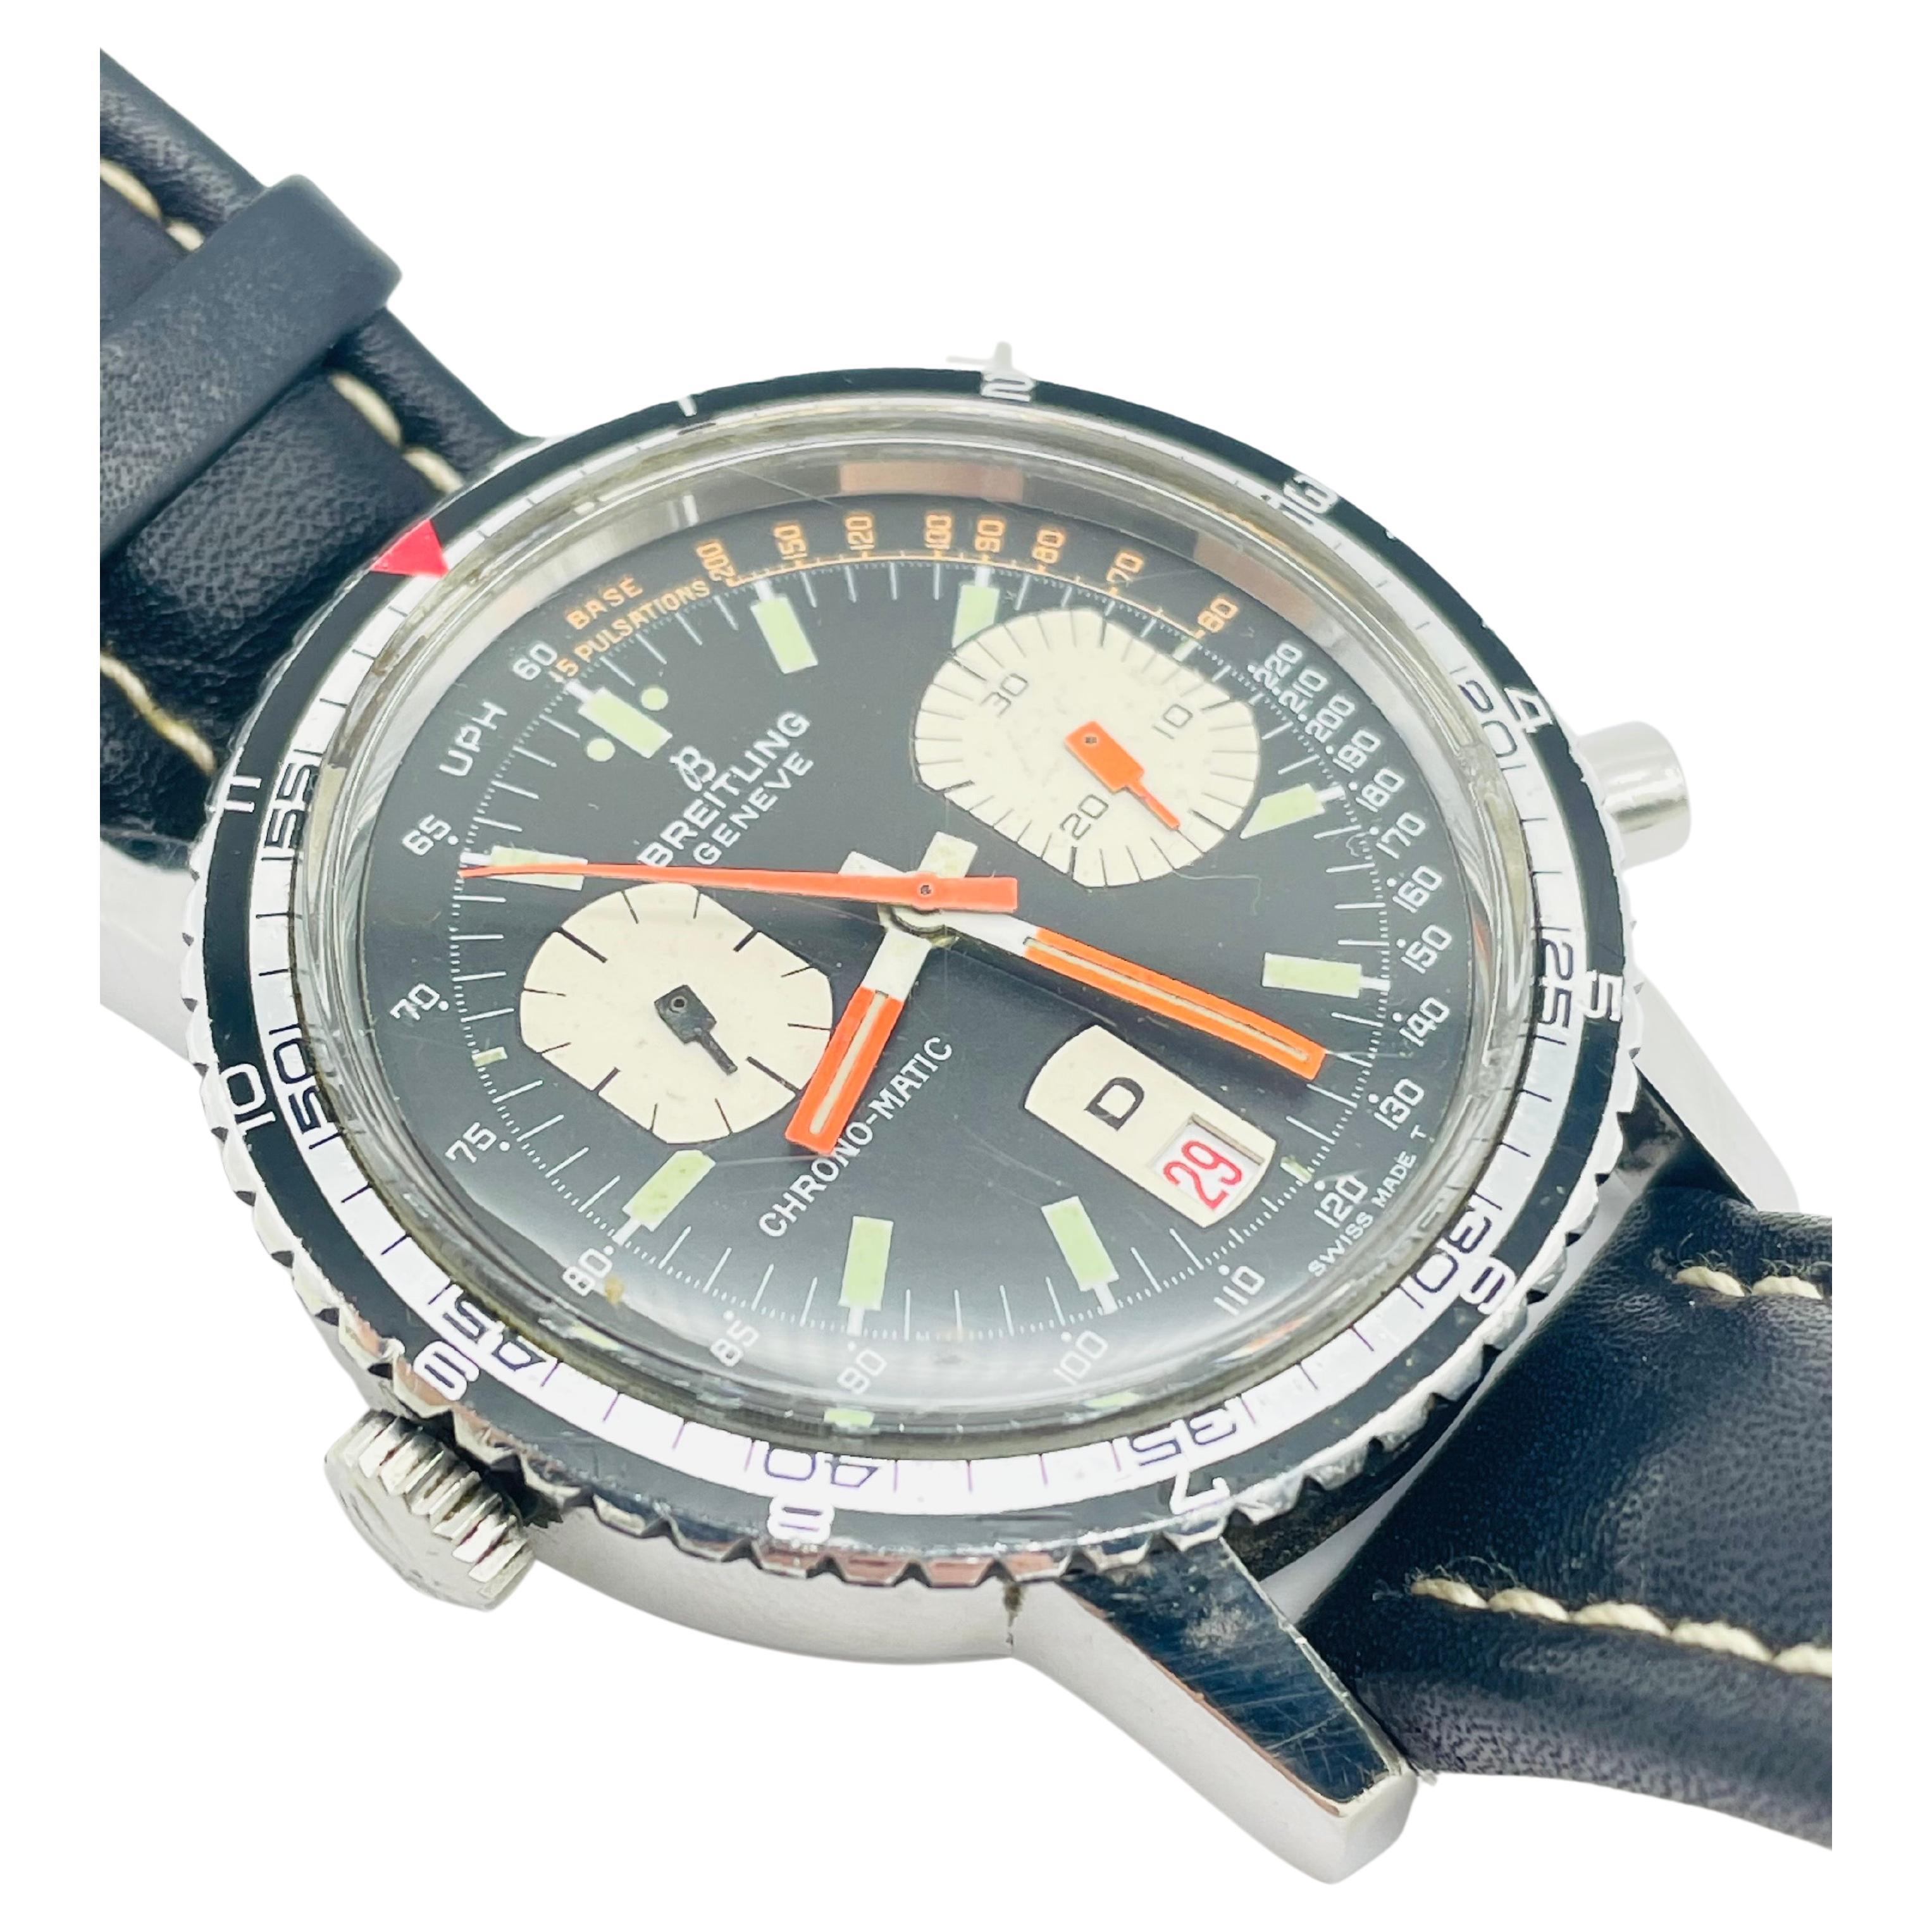 Vintage Breitling wristwatch Chrono - Matic Ref. 2110 - 15 (70s)